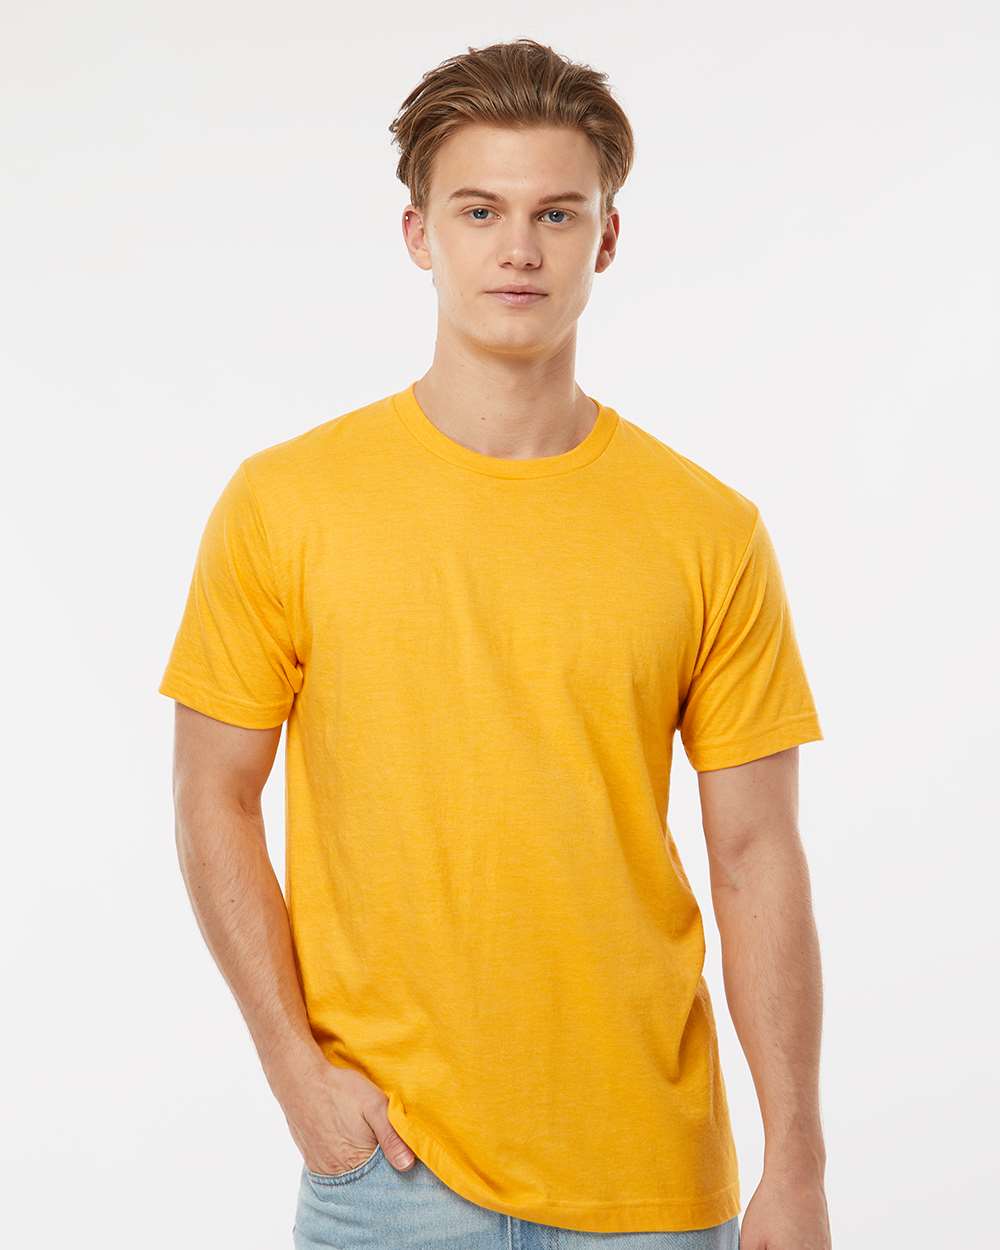 Tultex - Unisex Fine Jersey T-Shirt - 202